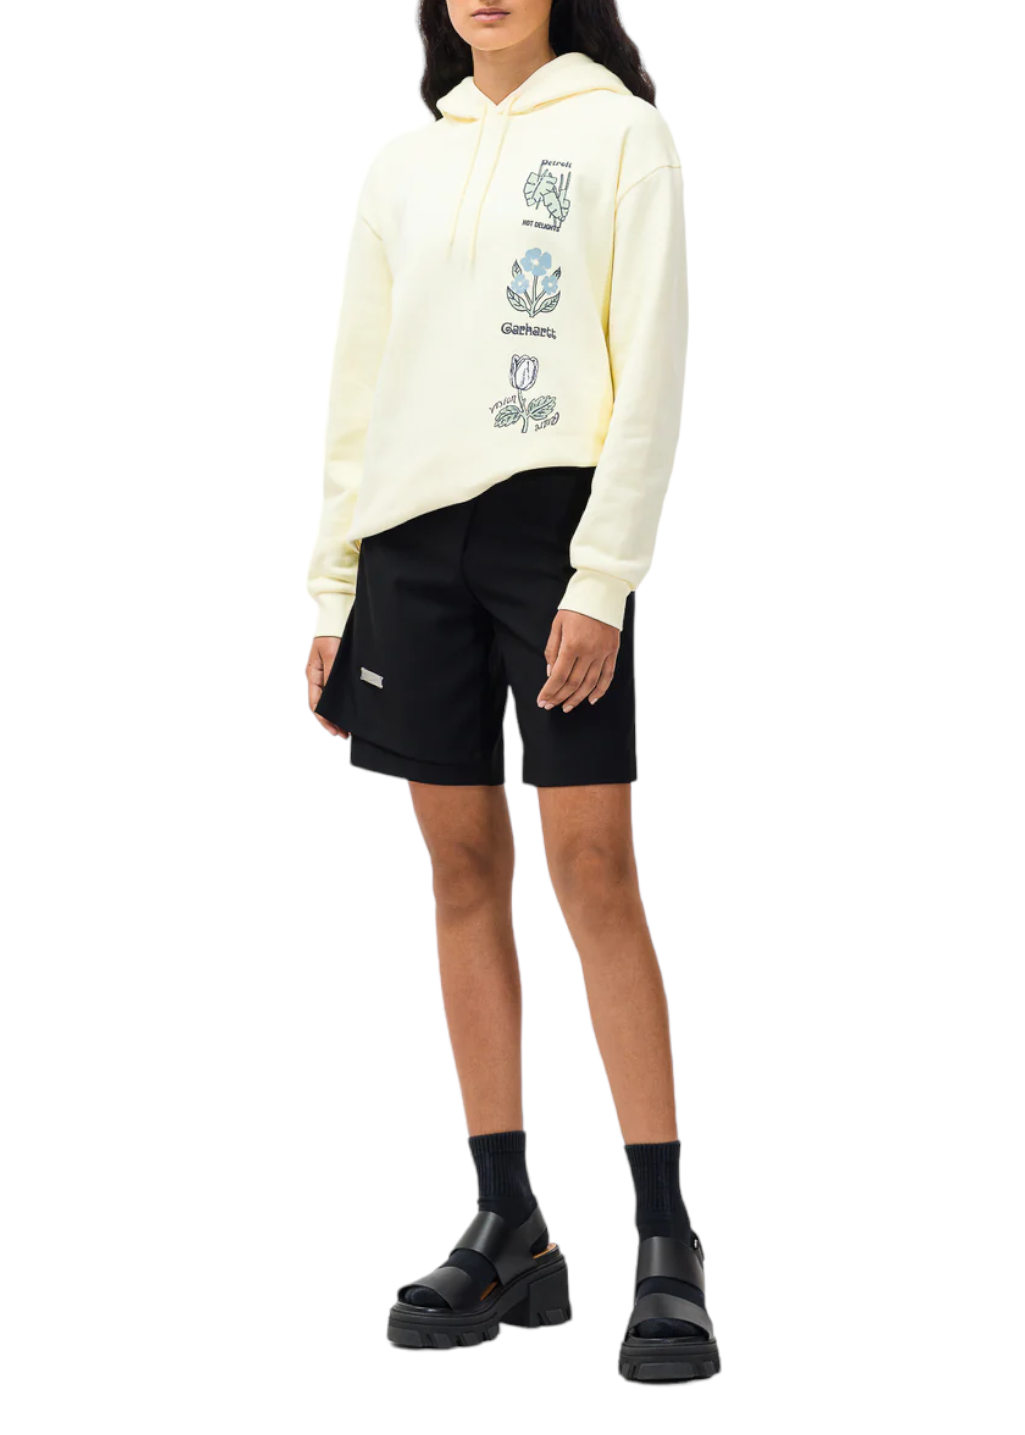 WDYWT] Carhartt overalls and Polyphia hoodie : r/streetwear